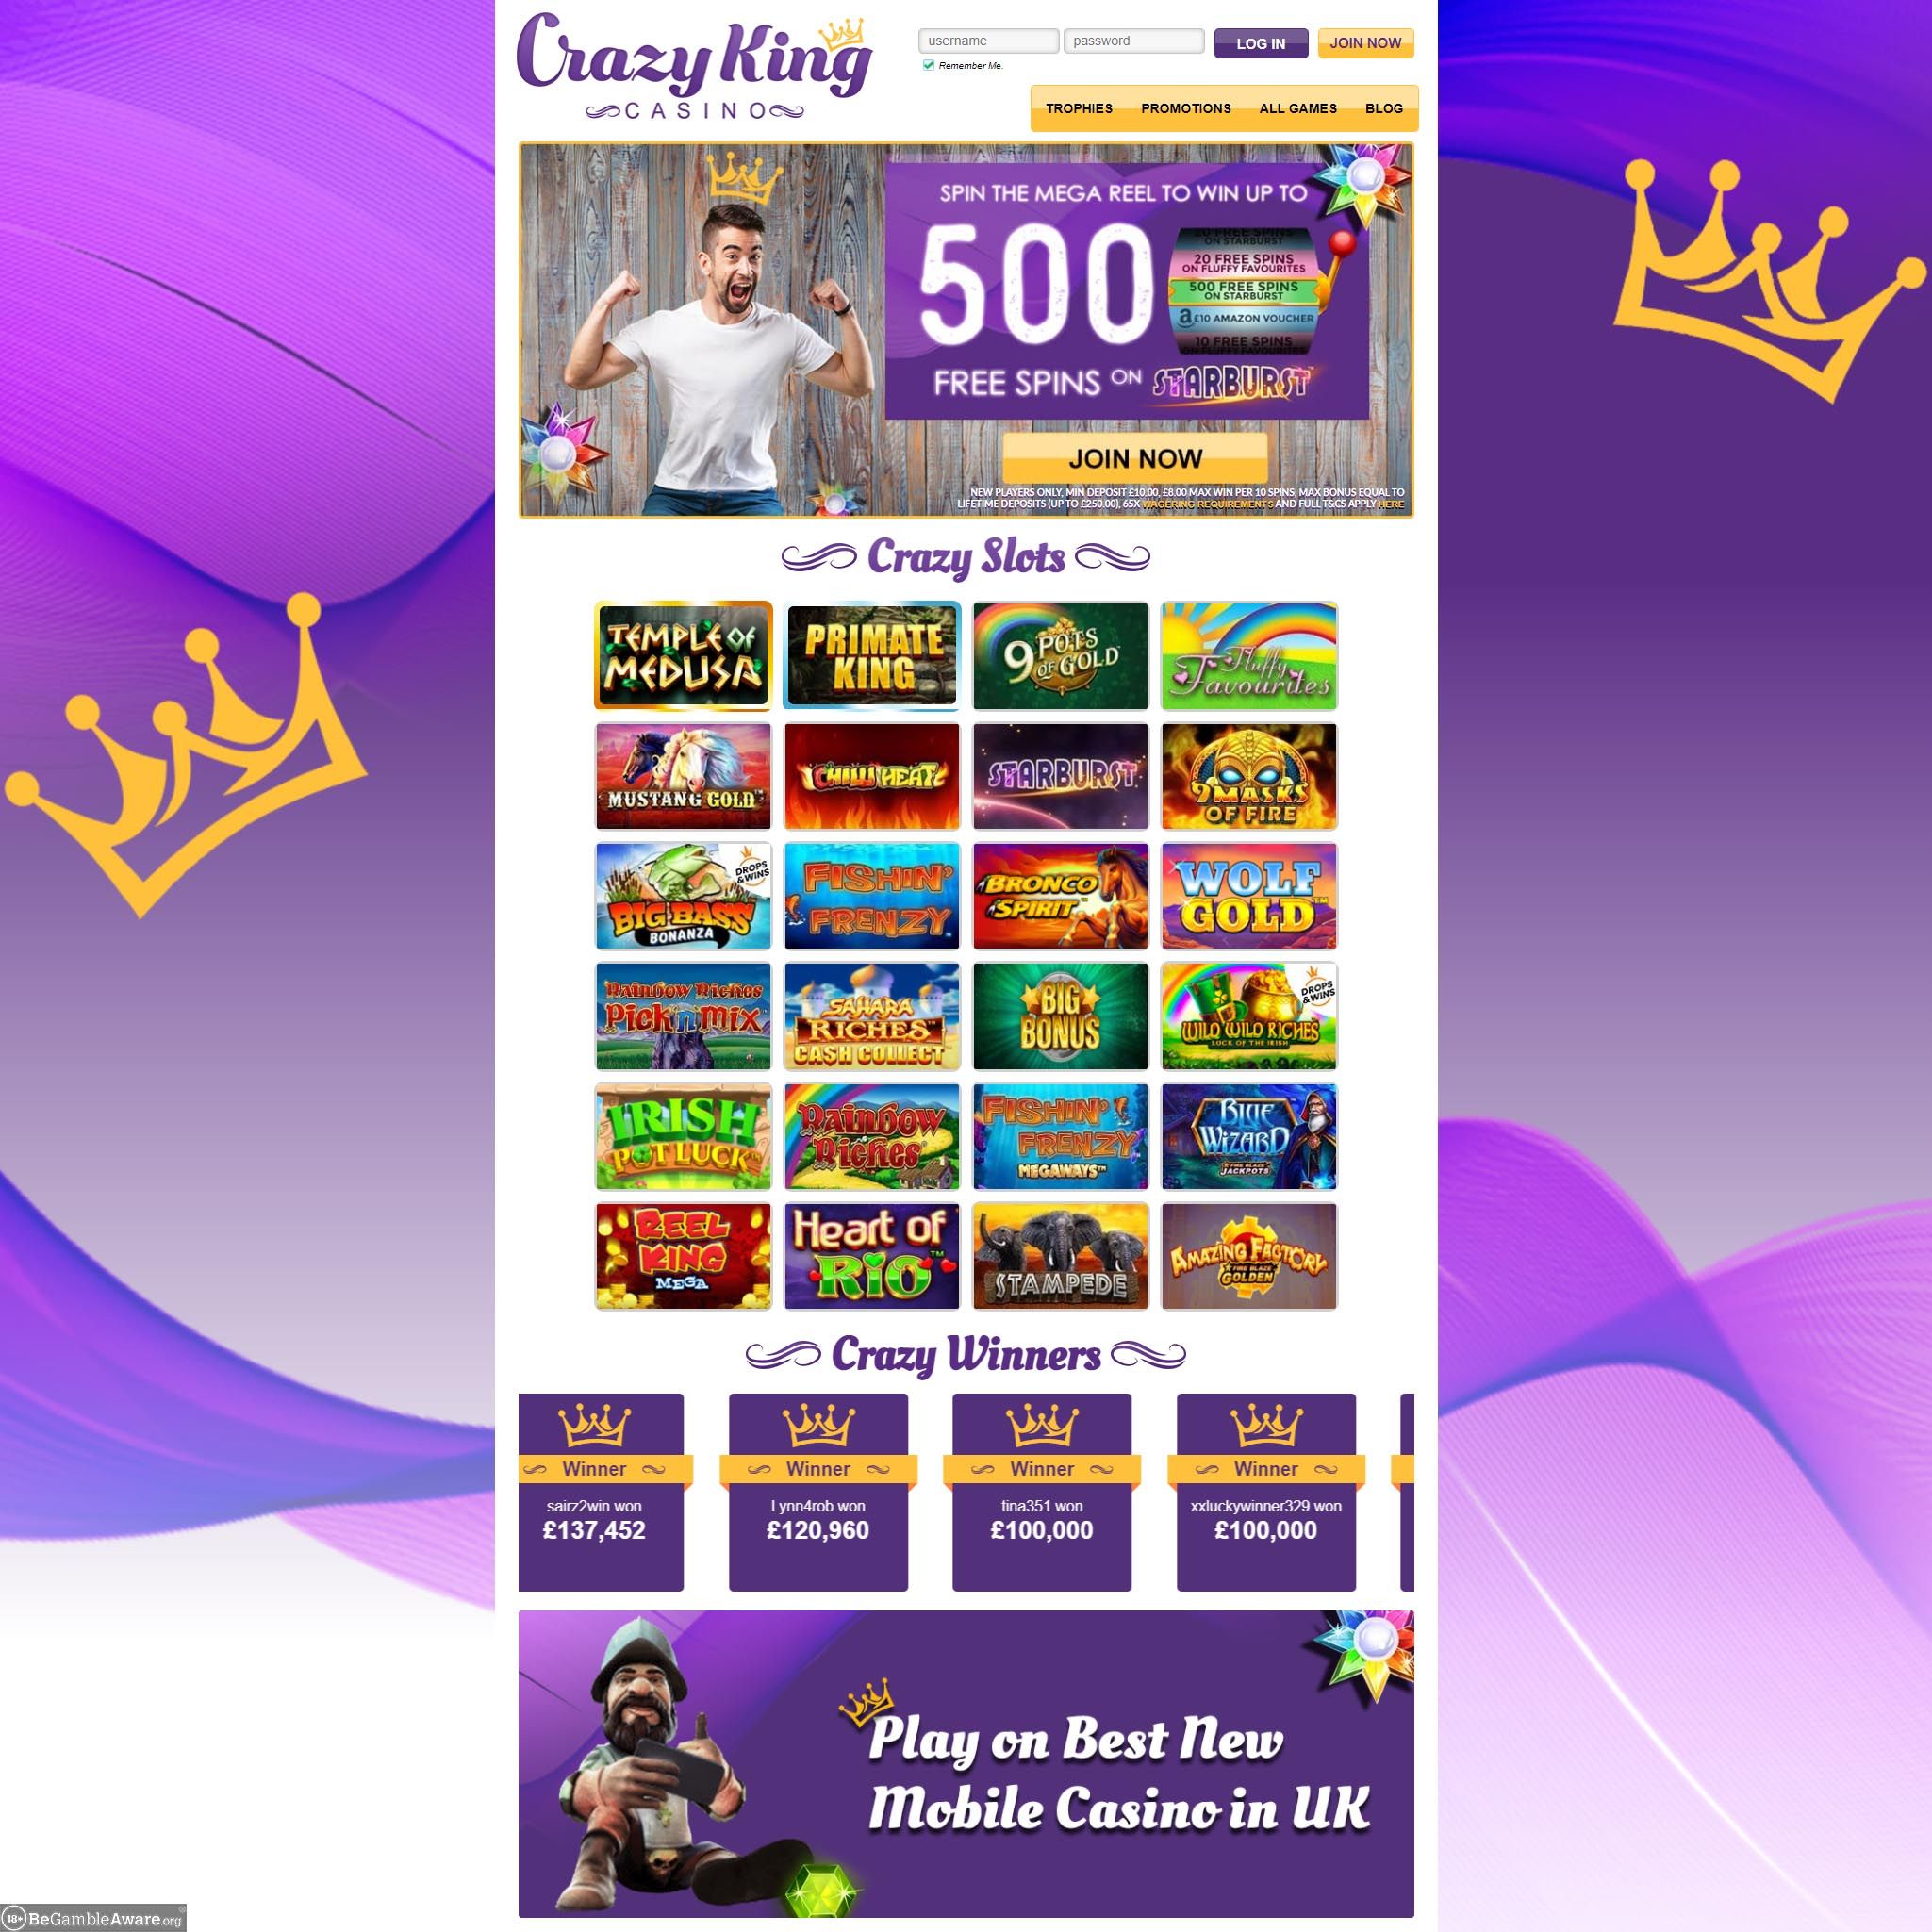 Crazy King Casino review